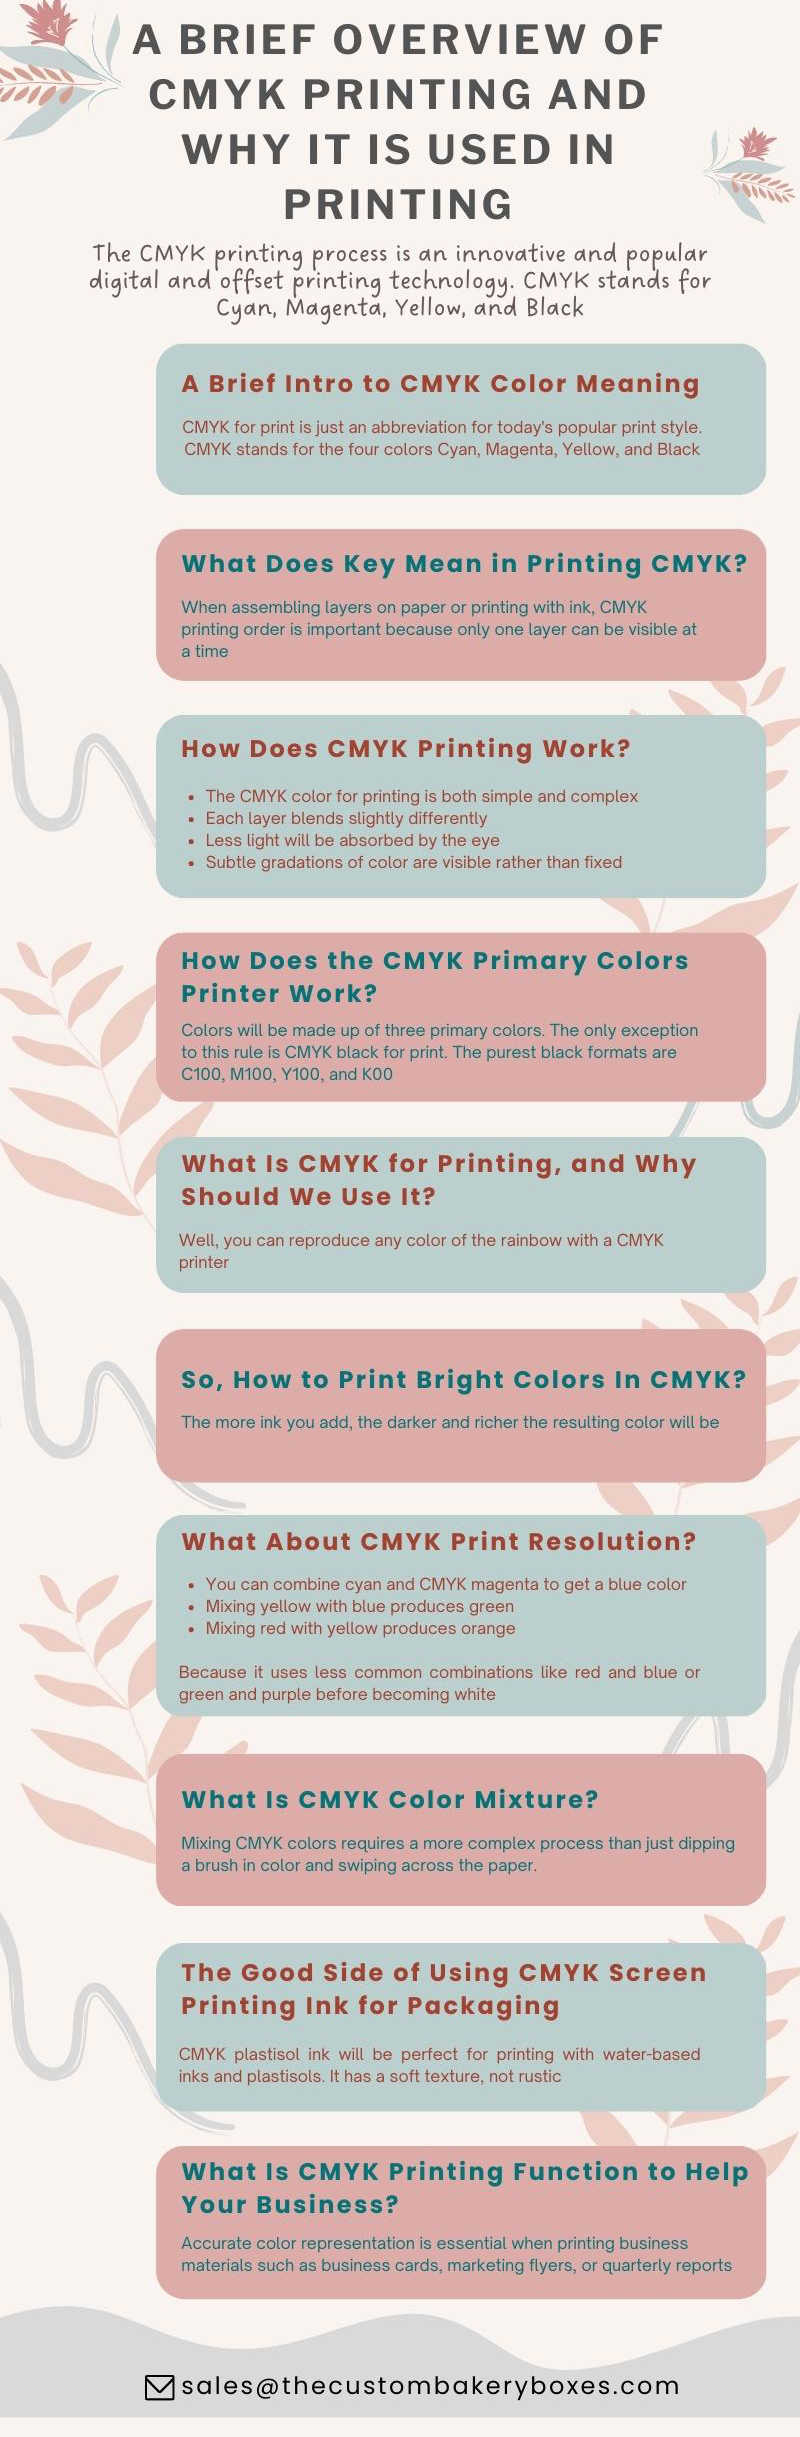 CMYK Printing